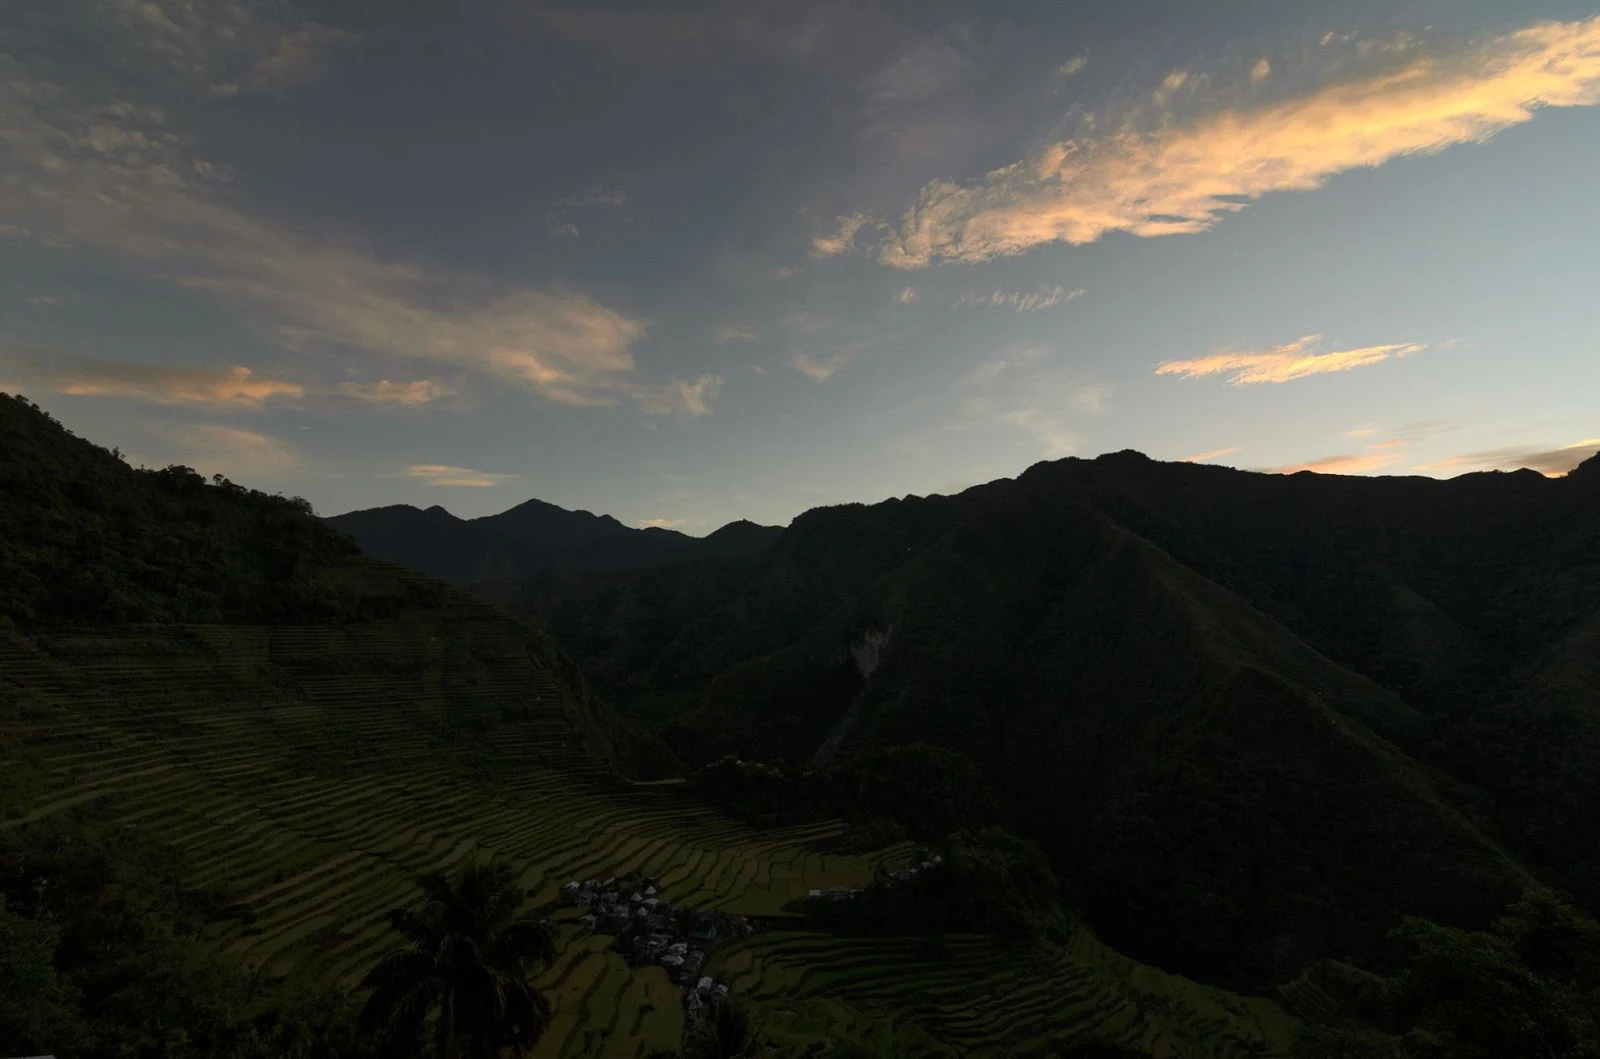 8th Wonder of the World Batad Rice Terraces Ifugao Cordillera Administrative Region Philippines Dawn of a New Day